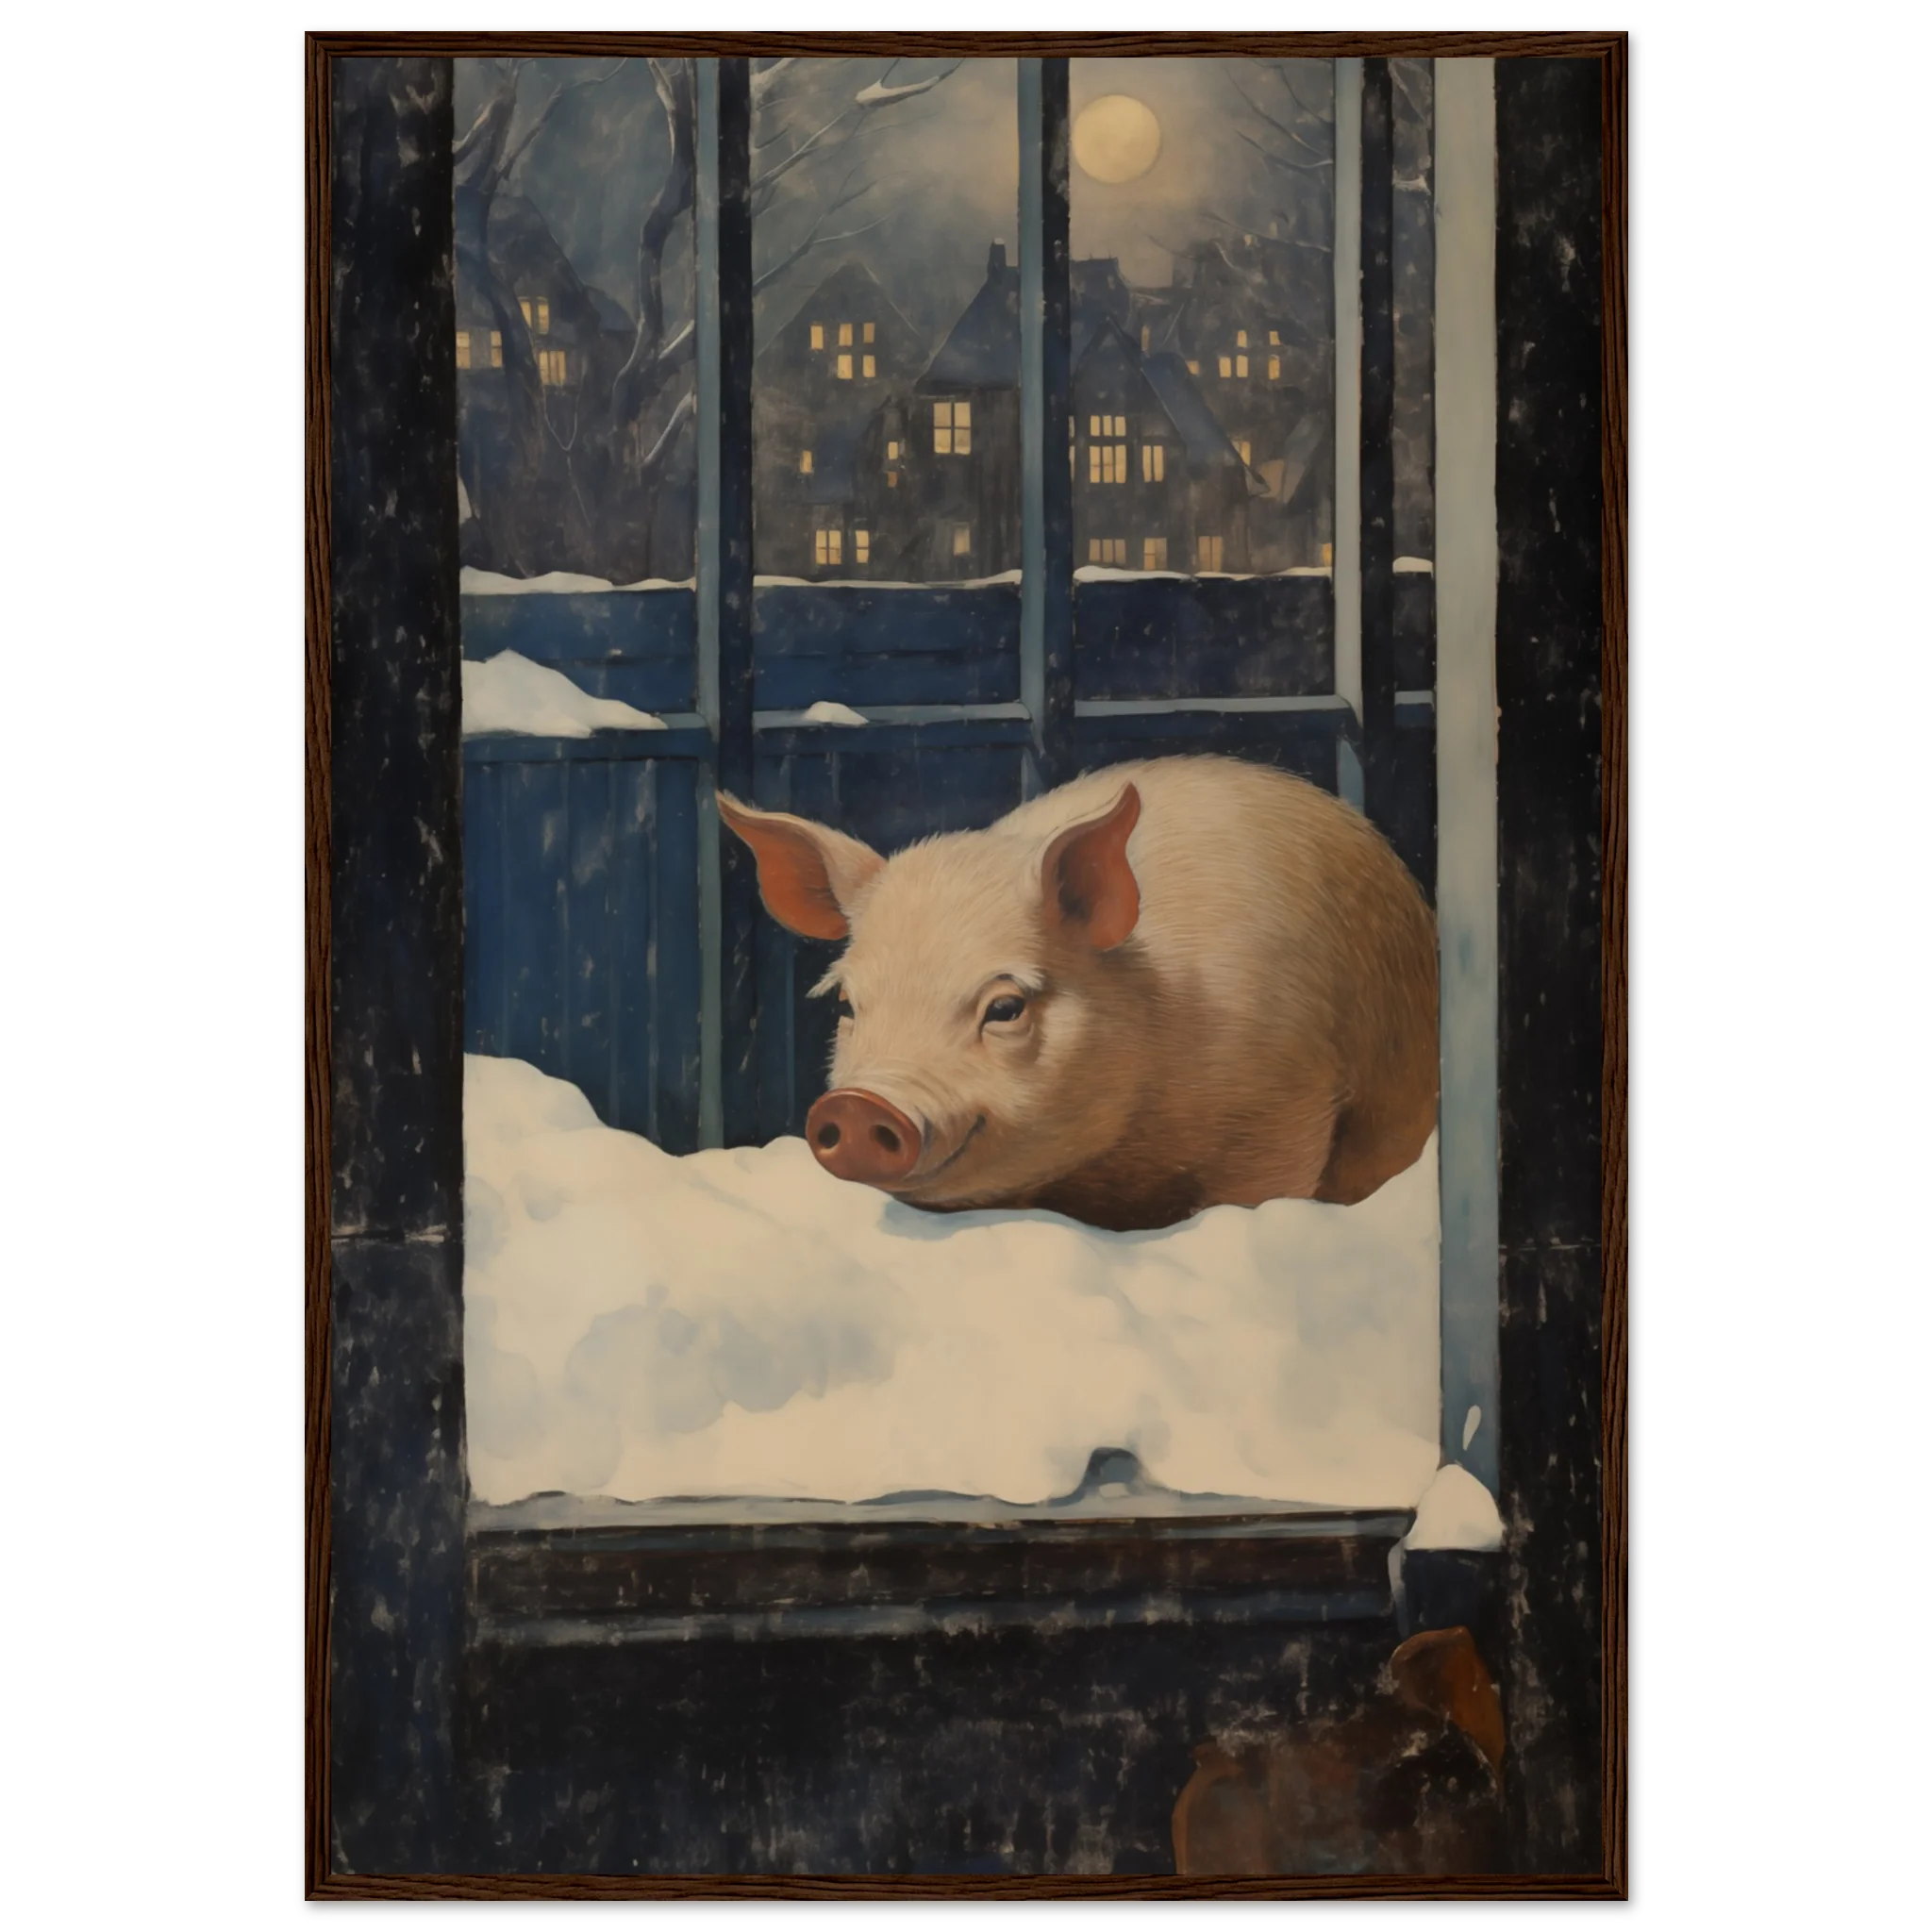 WINDOW PIG!